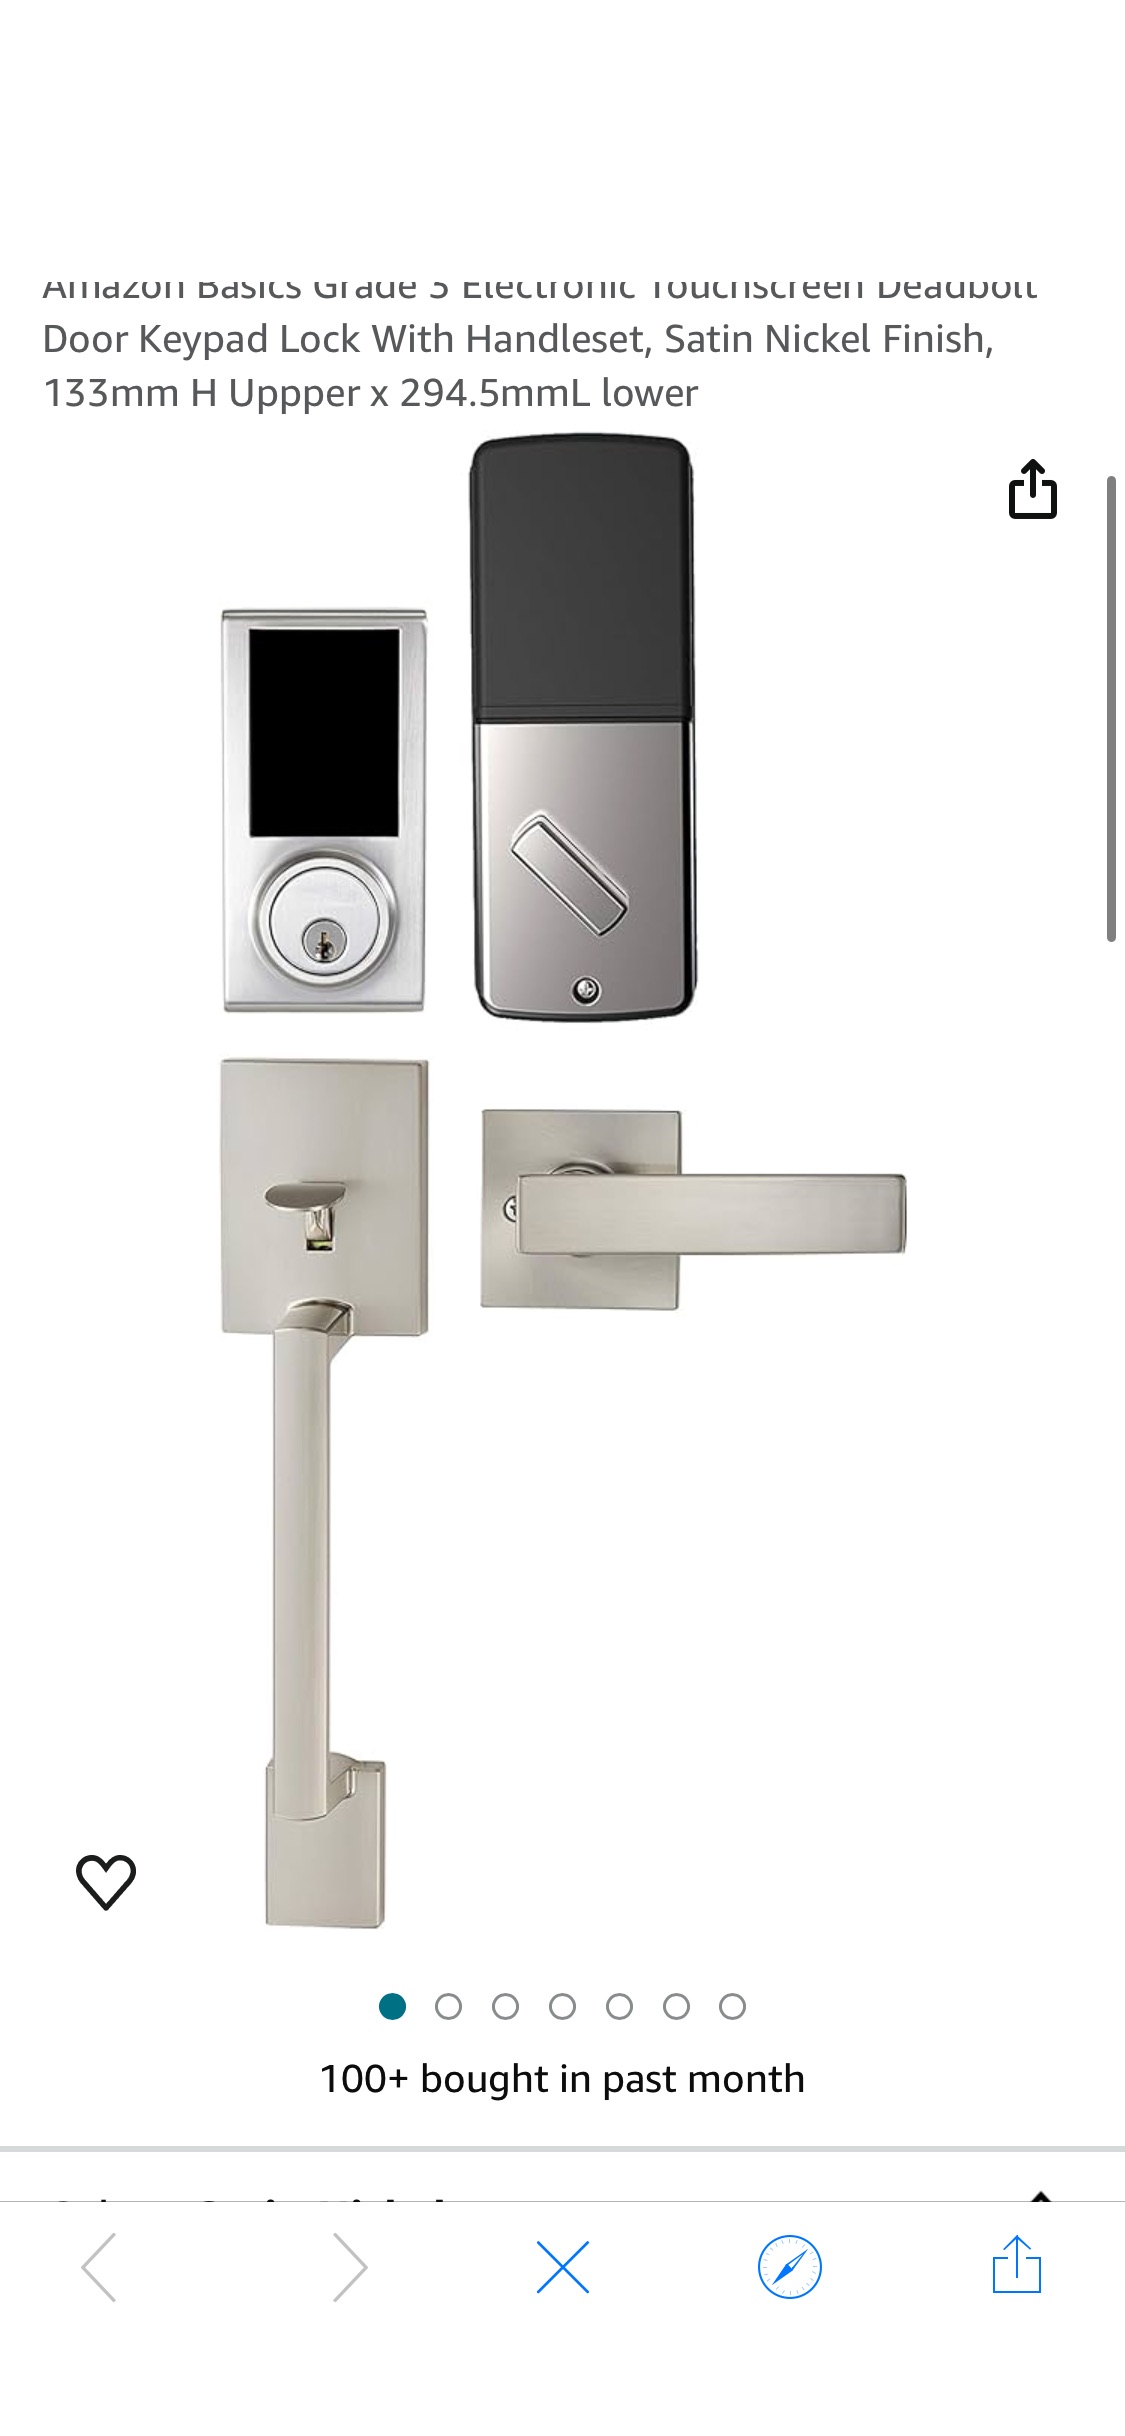 Amazon Basics Grade 3 Electronic Touchscreen Deadbolt Door Keypad Lock With Handleset, Satin Nickel Finish, 133mm H Uppper x 294.5mmL lower - Amazon.com